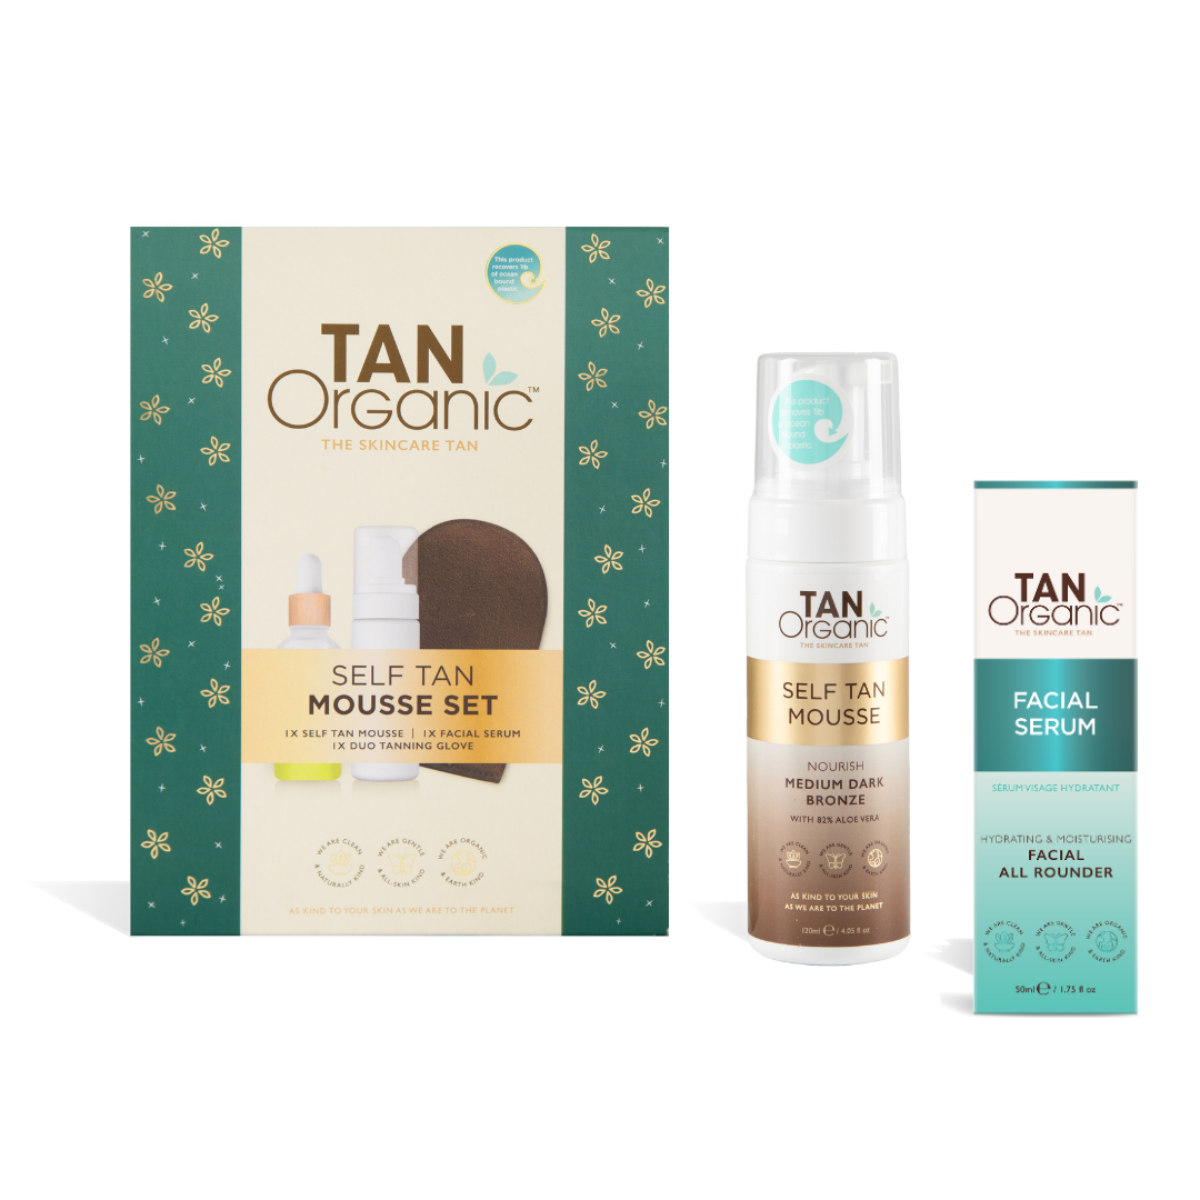 Tan Organic Self Tan Mousse Set